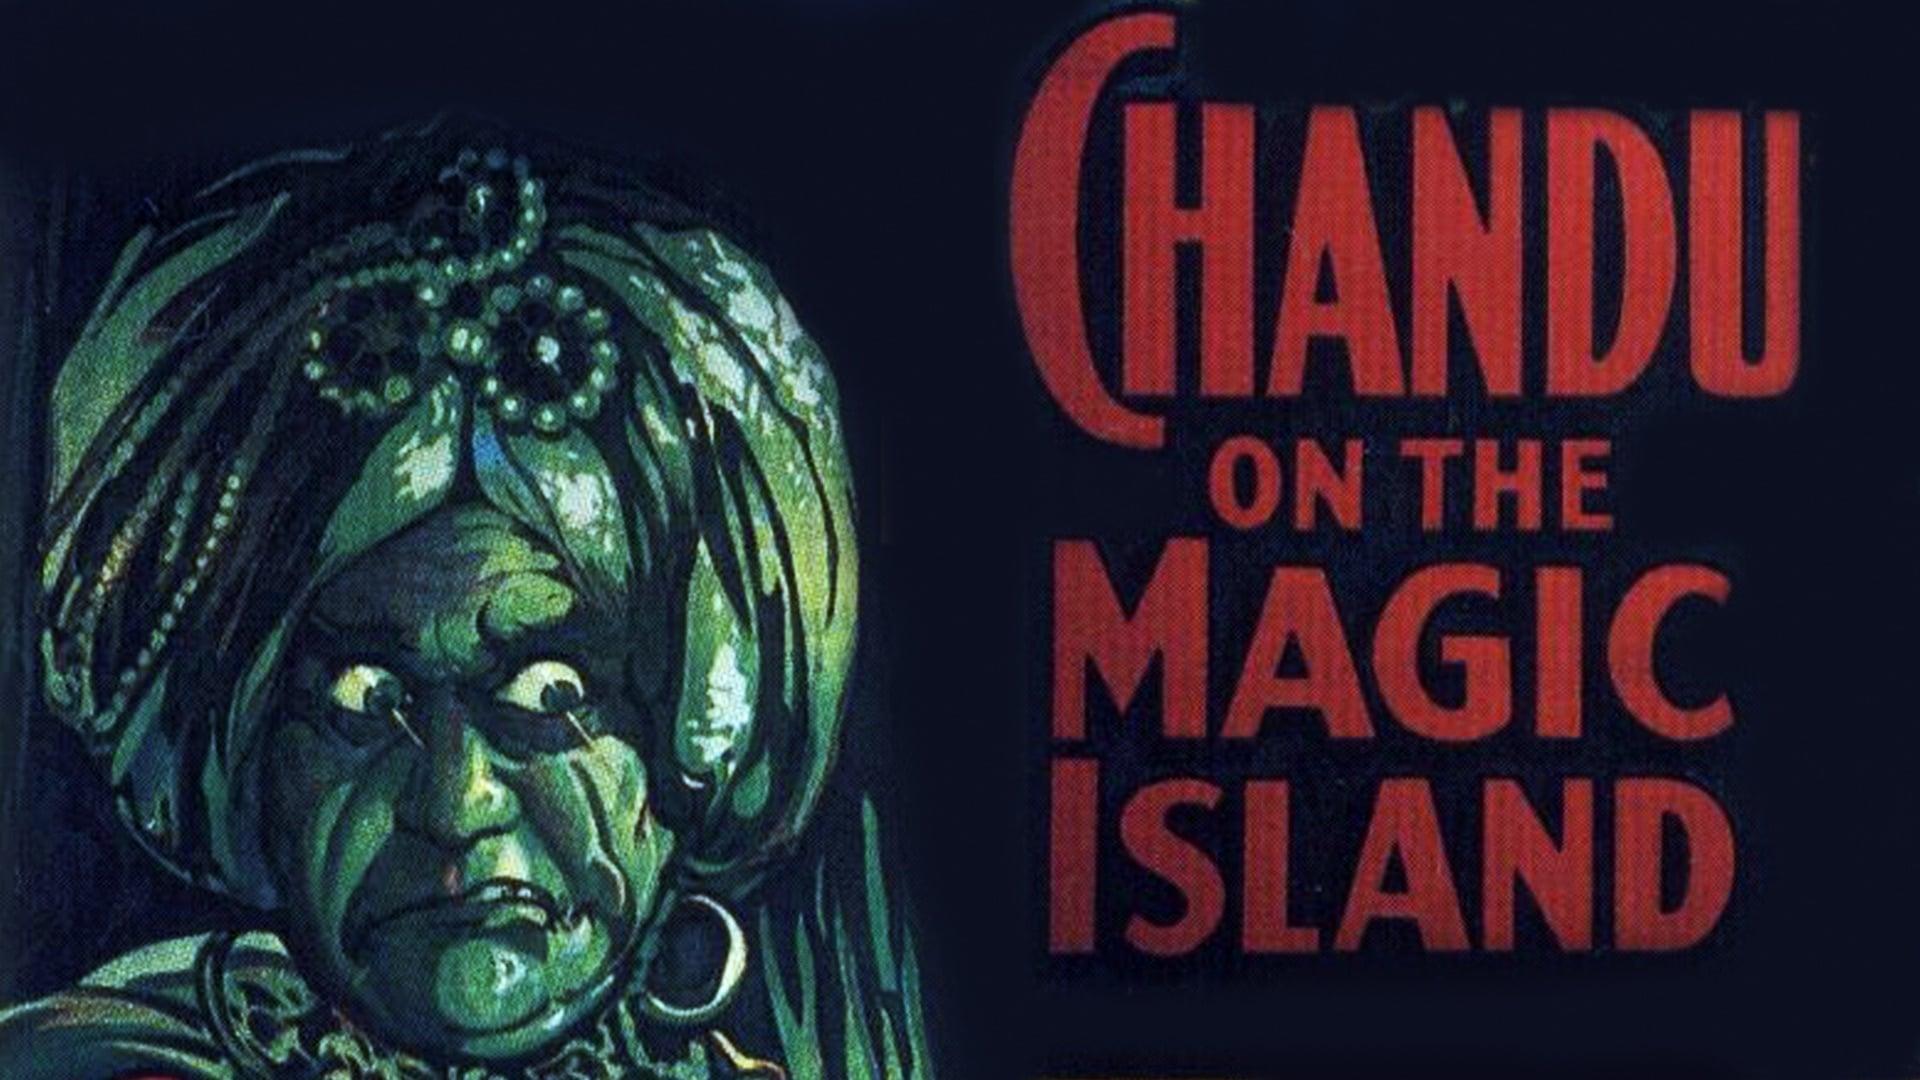 Chandu on the Magic Island backdrop